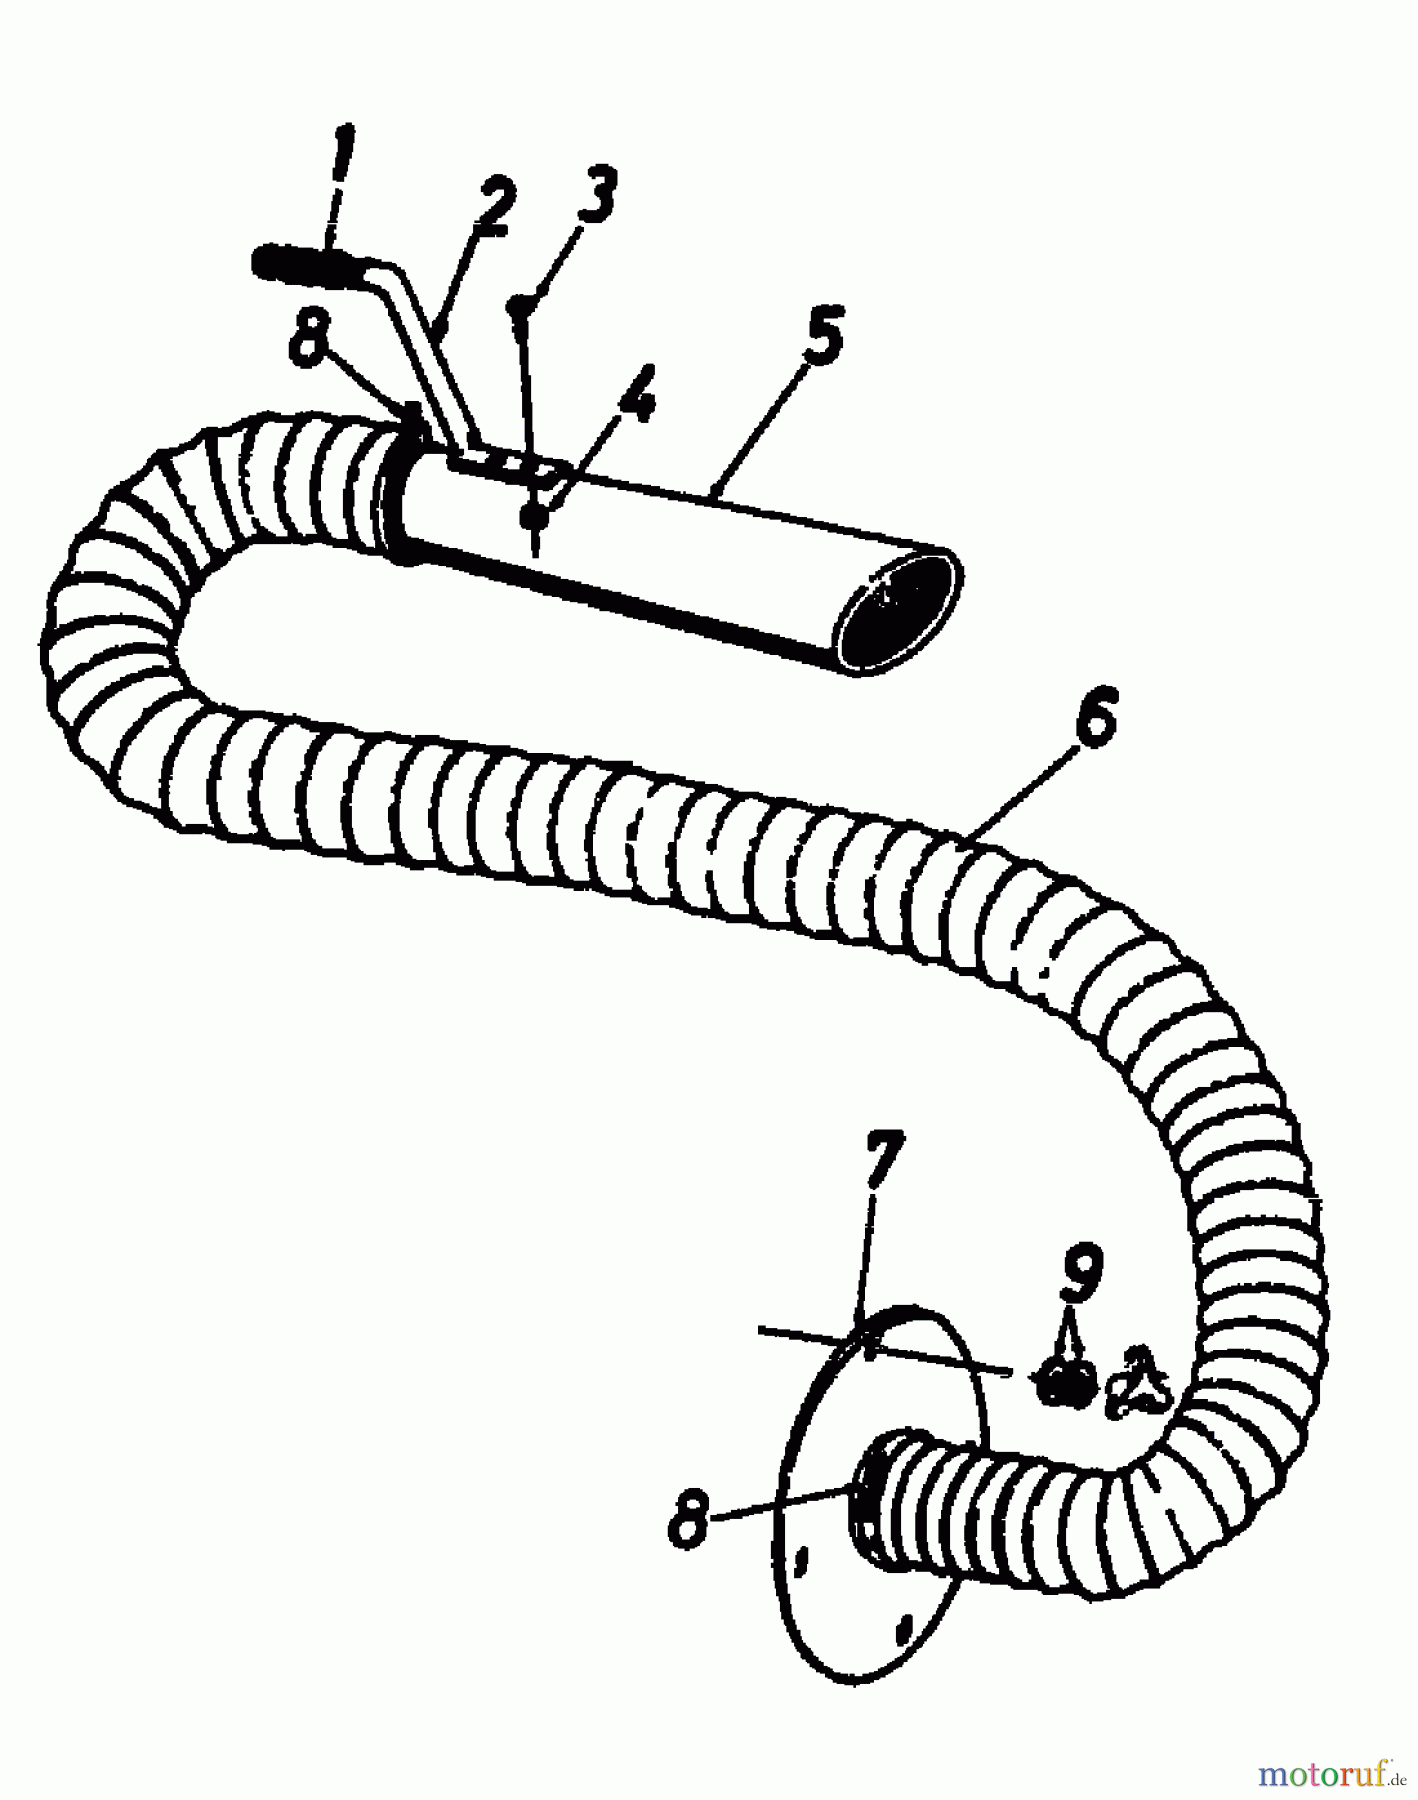  Gutbrod Leaf blower, Blower vac LS 76-50 04201.01  (1996) Vaccum hose